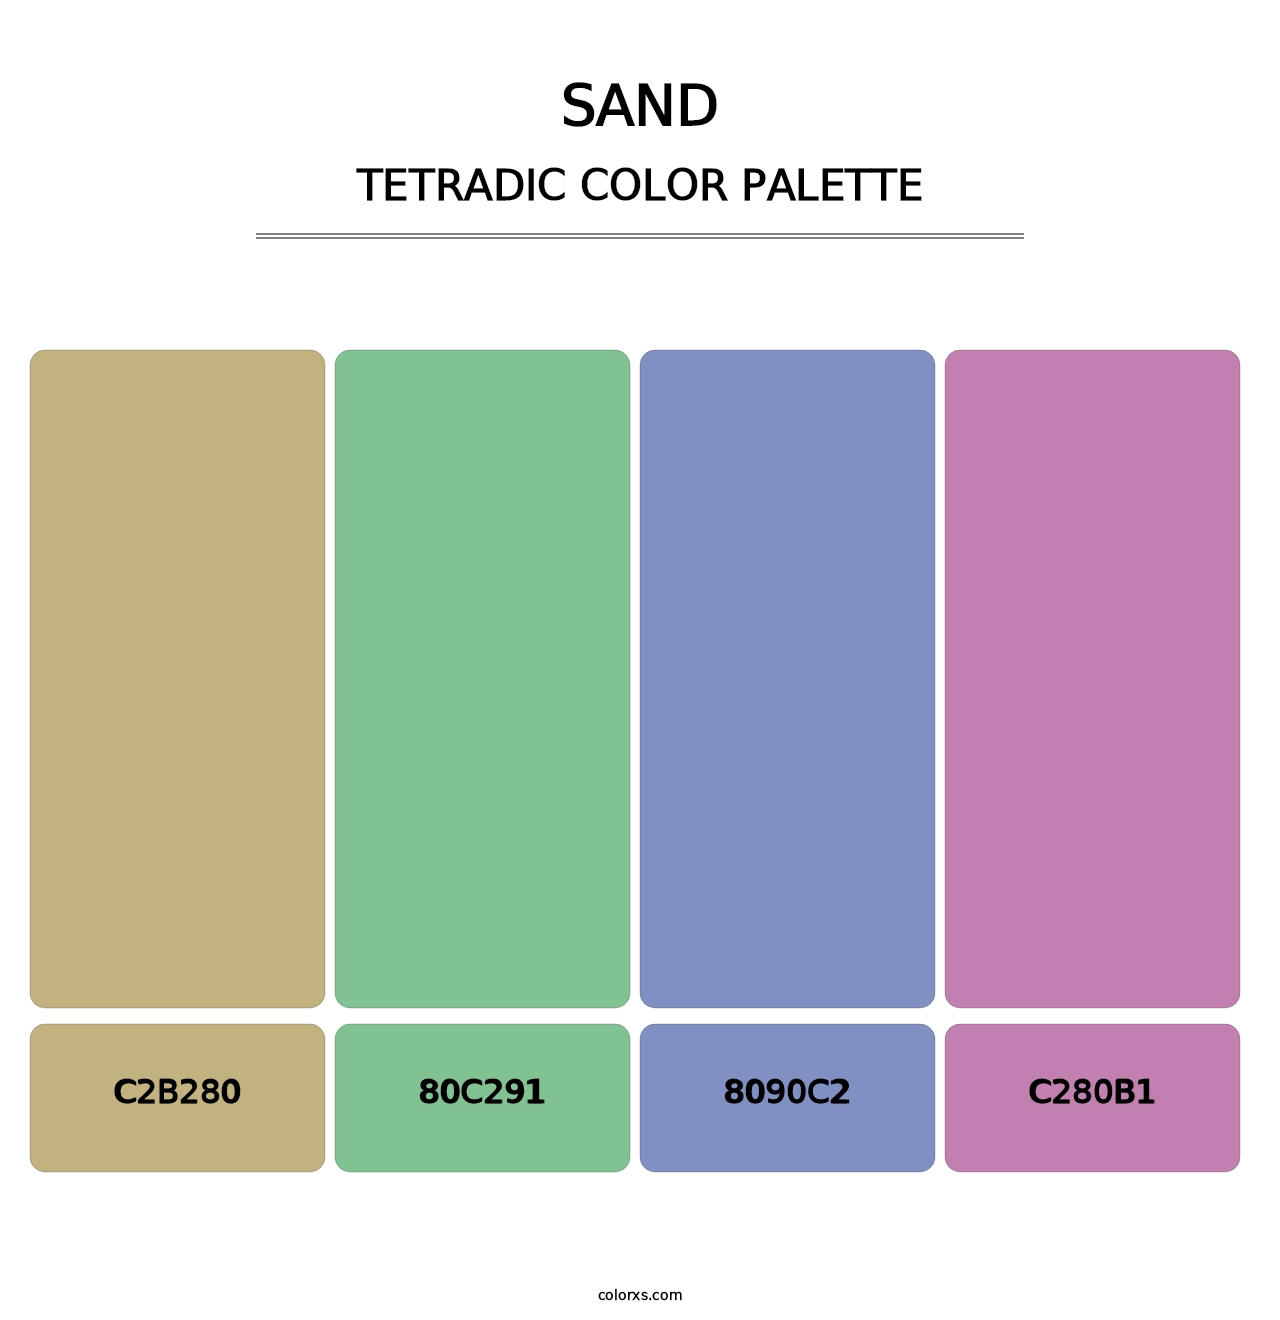 Sand - Tetradic Color Palette